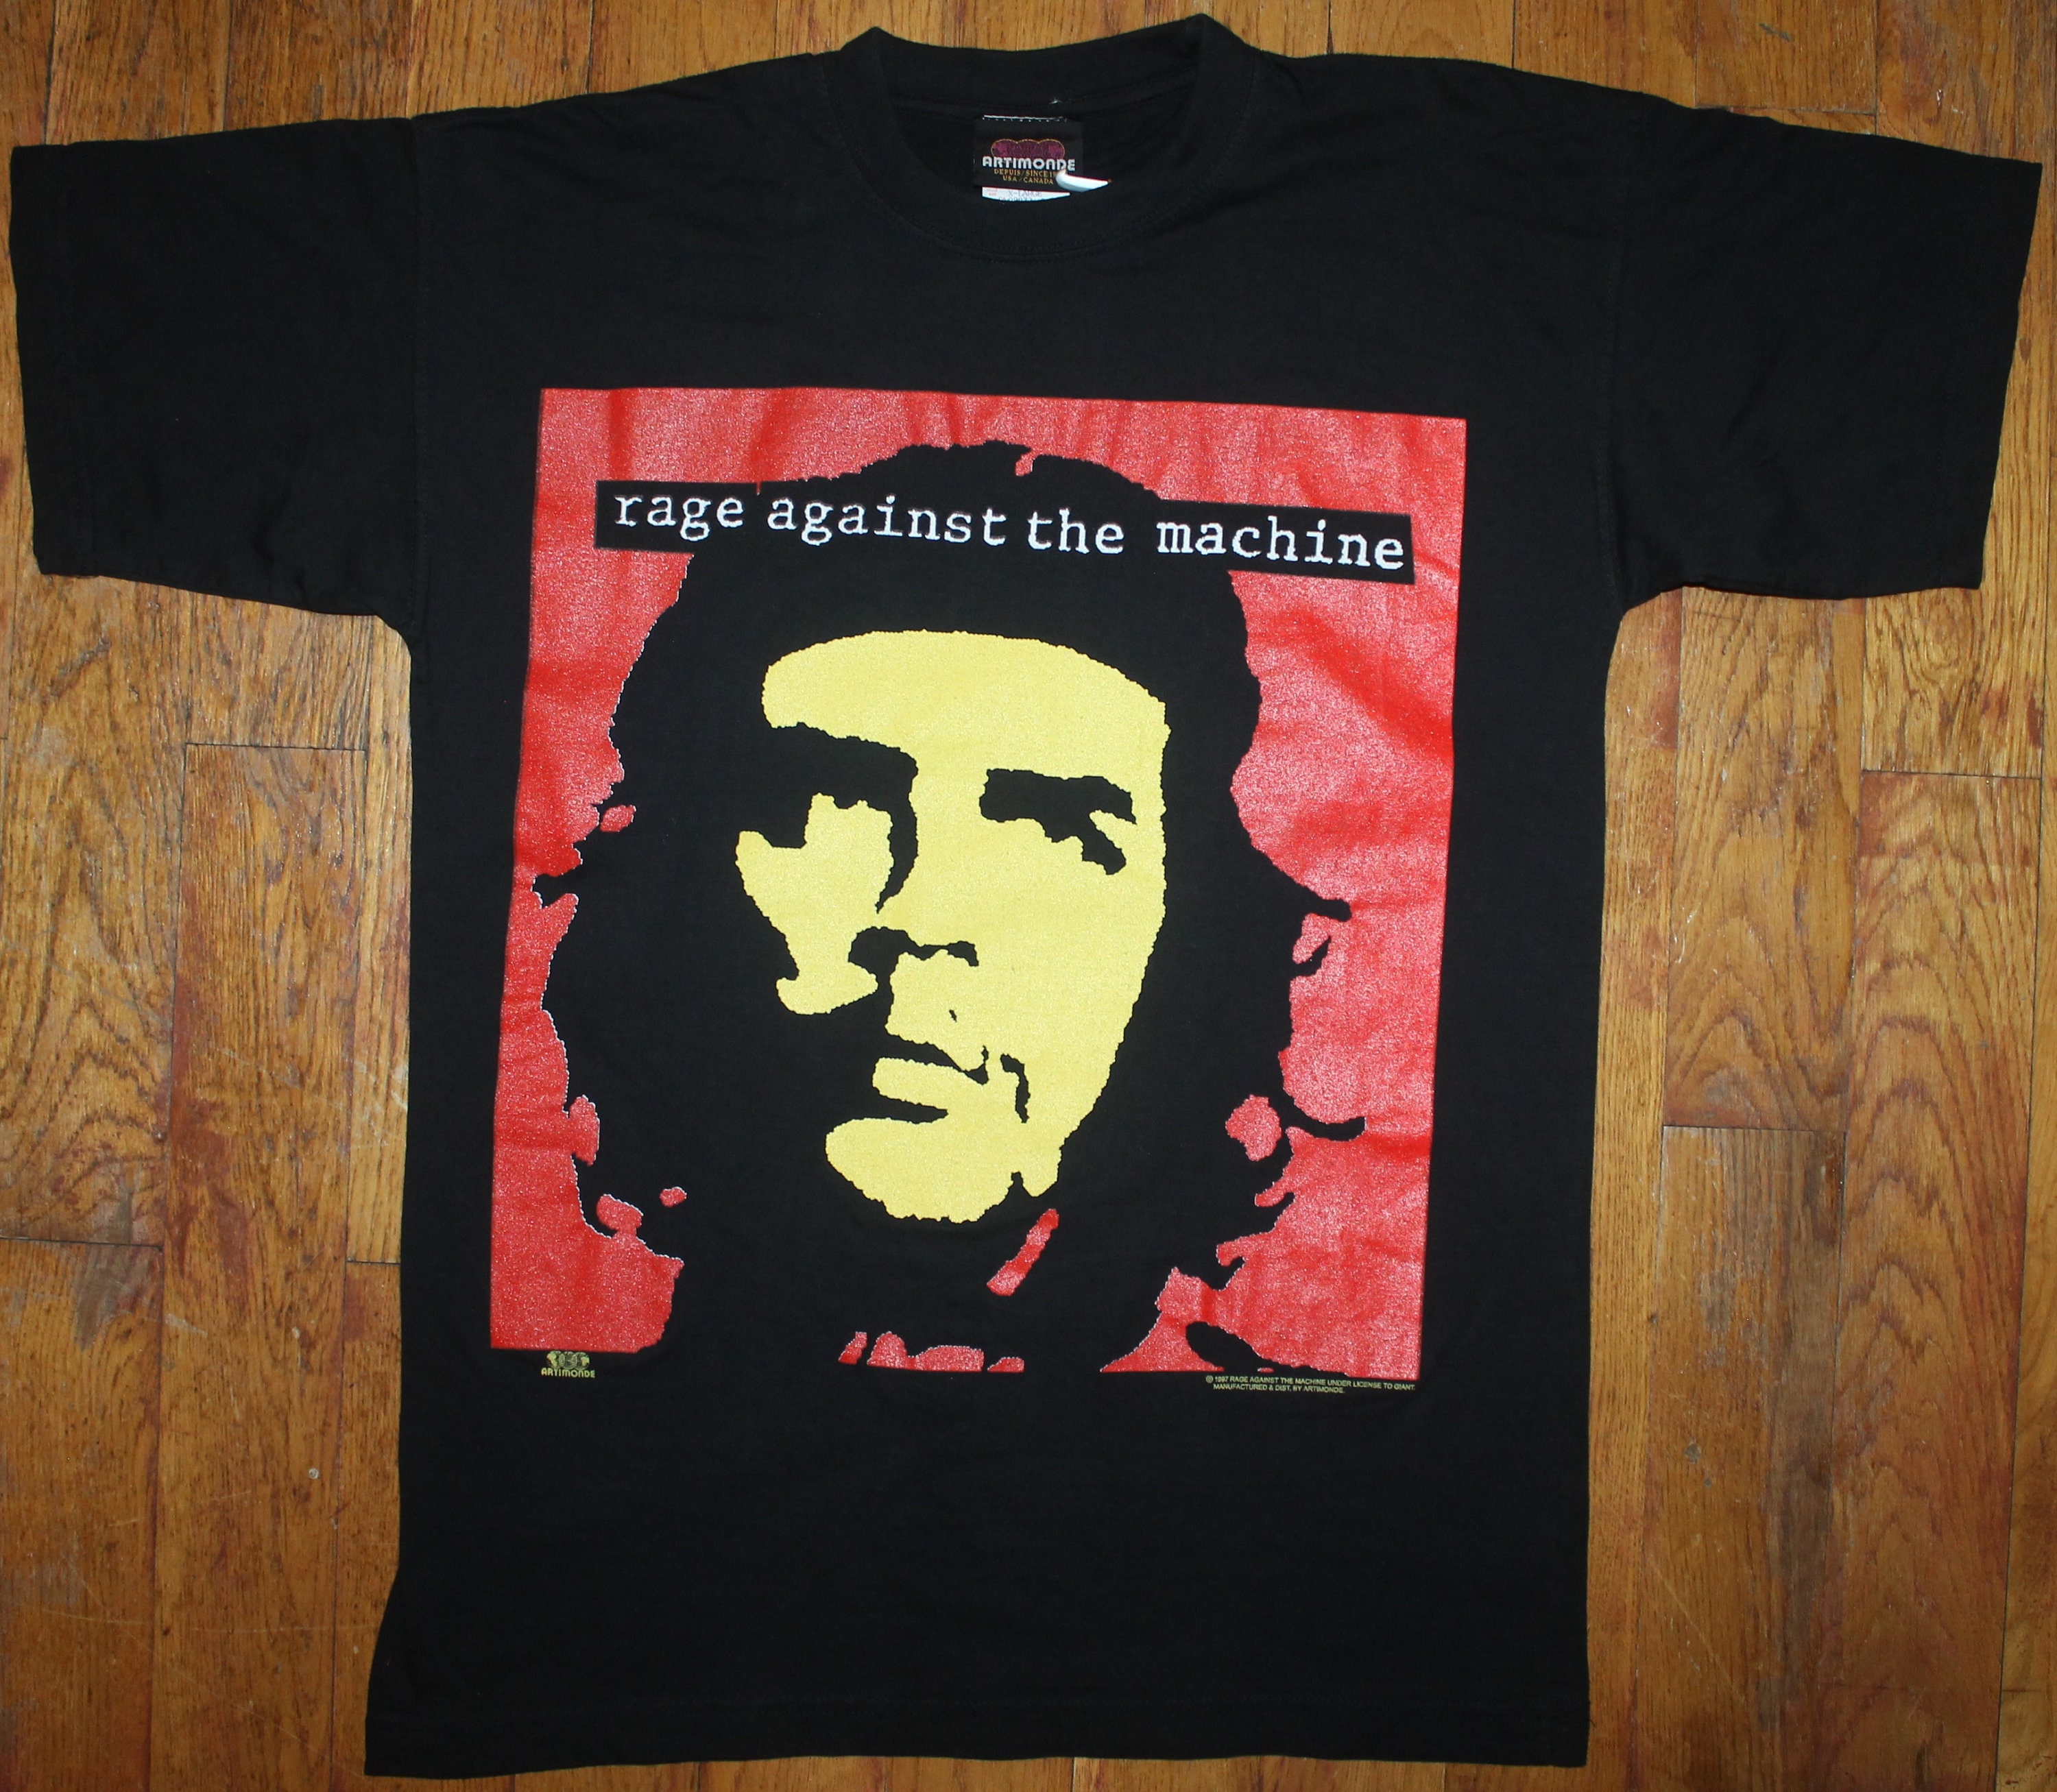 2020 New Che Guevara Pop Art jacket * Rock Chang * Black Schwarz Men's  Jacket Hoodies(XXS-4XL)